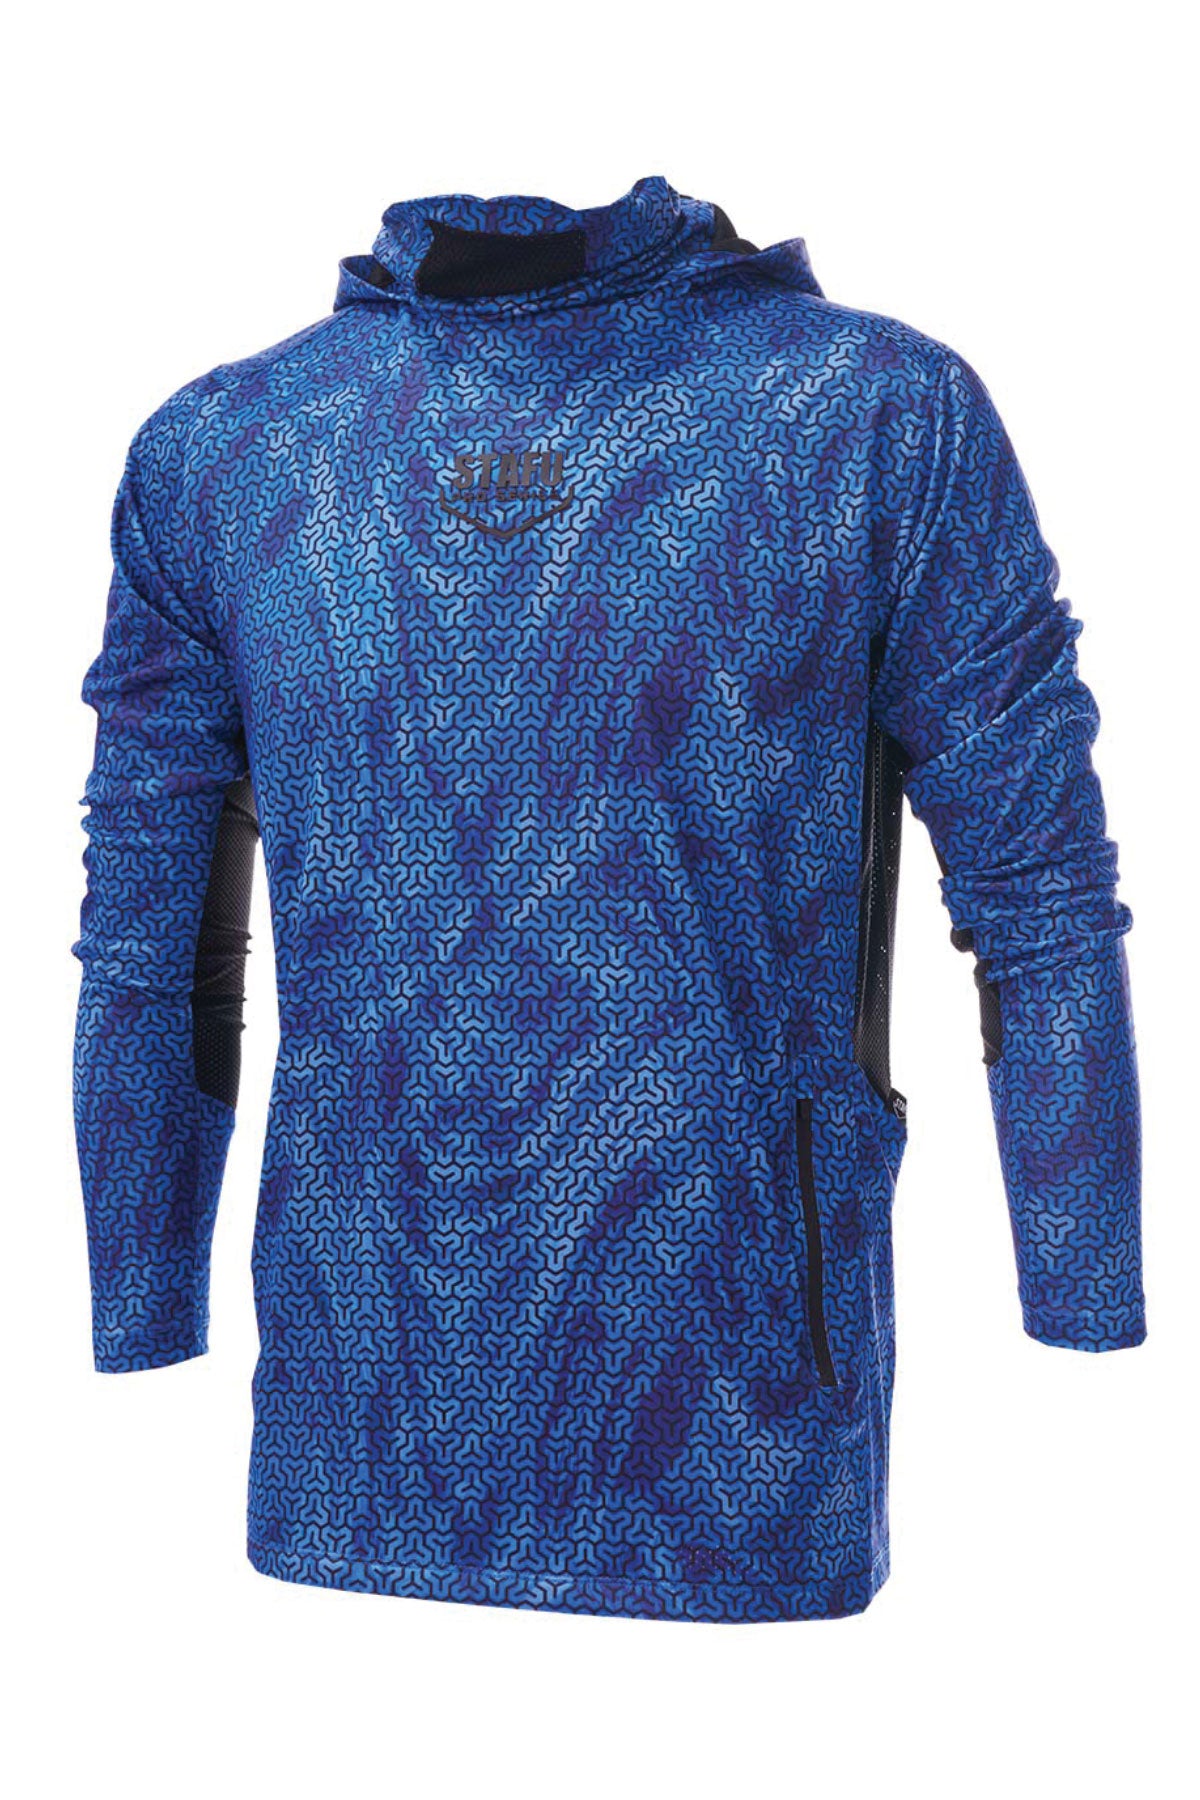 Argonaut Hooded Fishing Shirt - Trophy - Blue - Stafu Pro Series